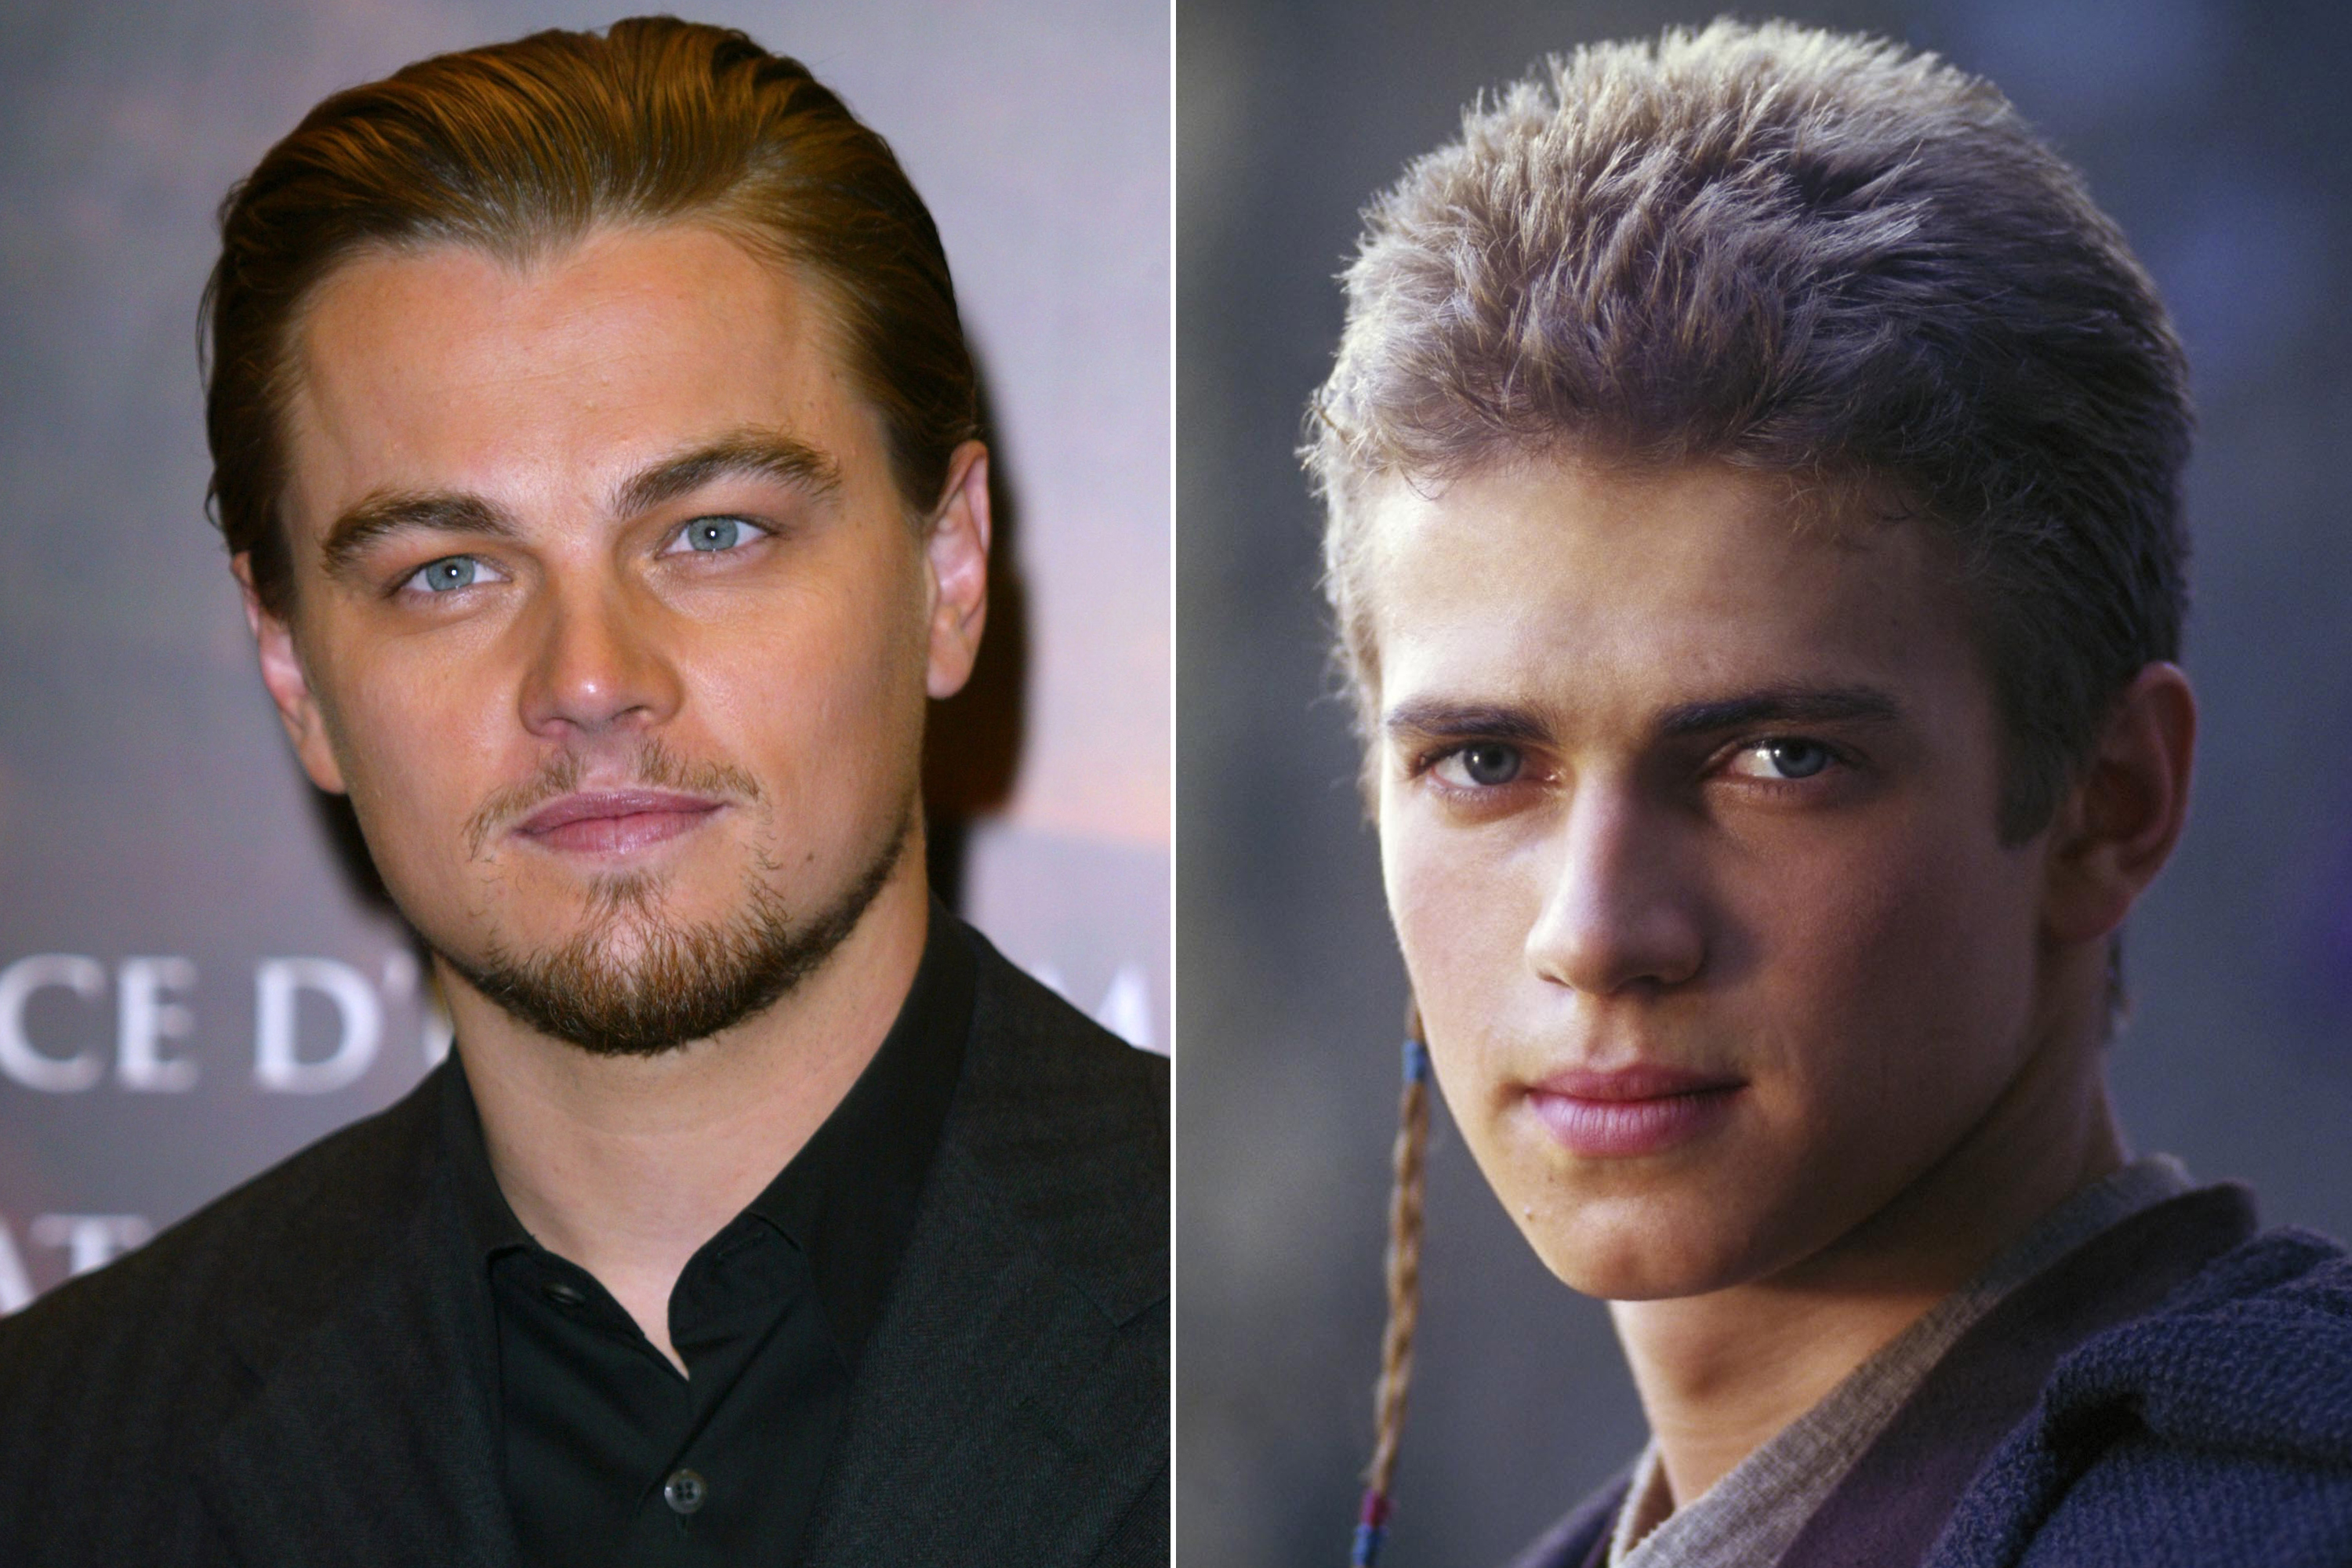 Leonardo DiCaprio was almost cast as Anakin Skywalker in Star Wars